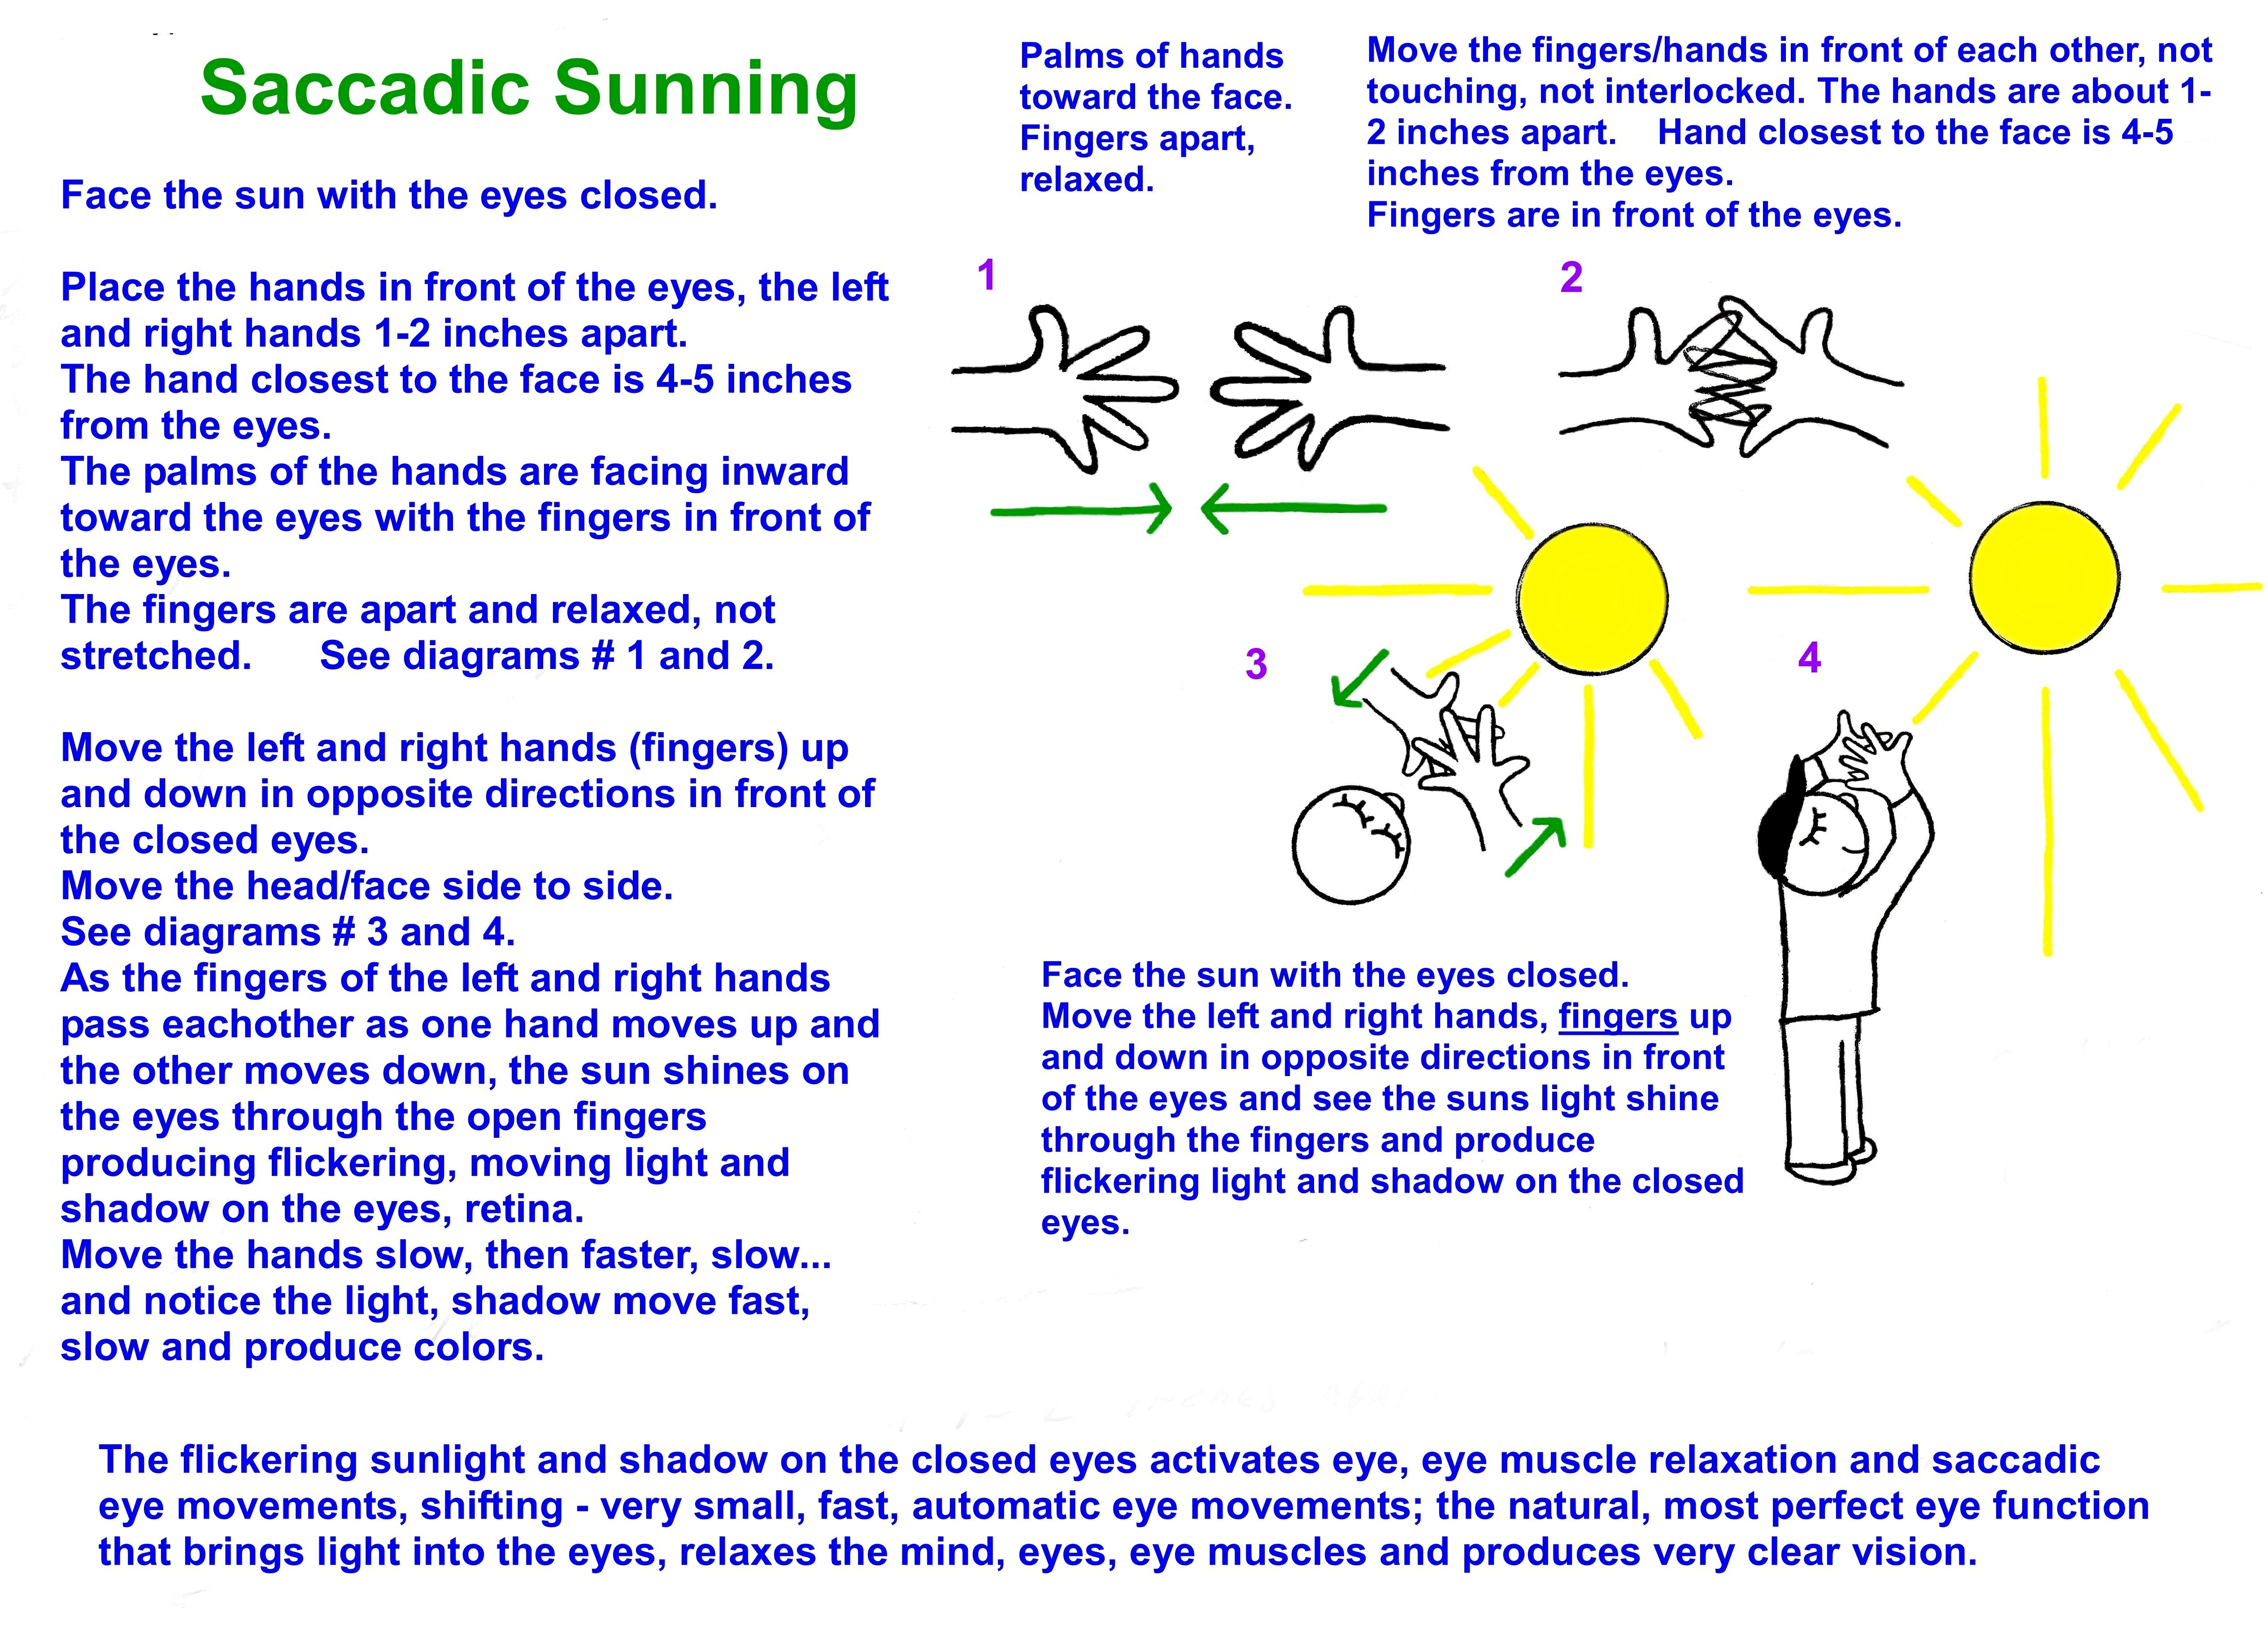 Saccadic Sunning directions